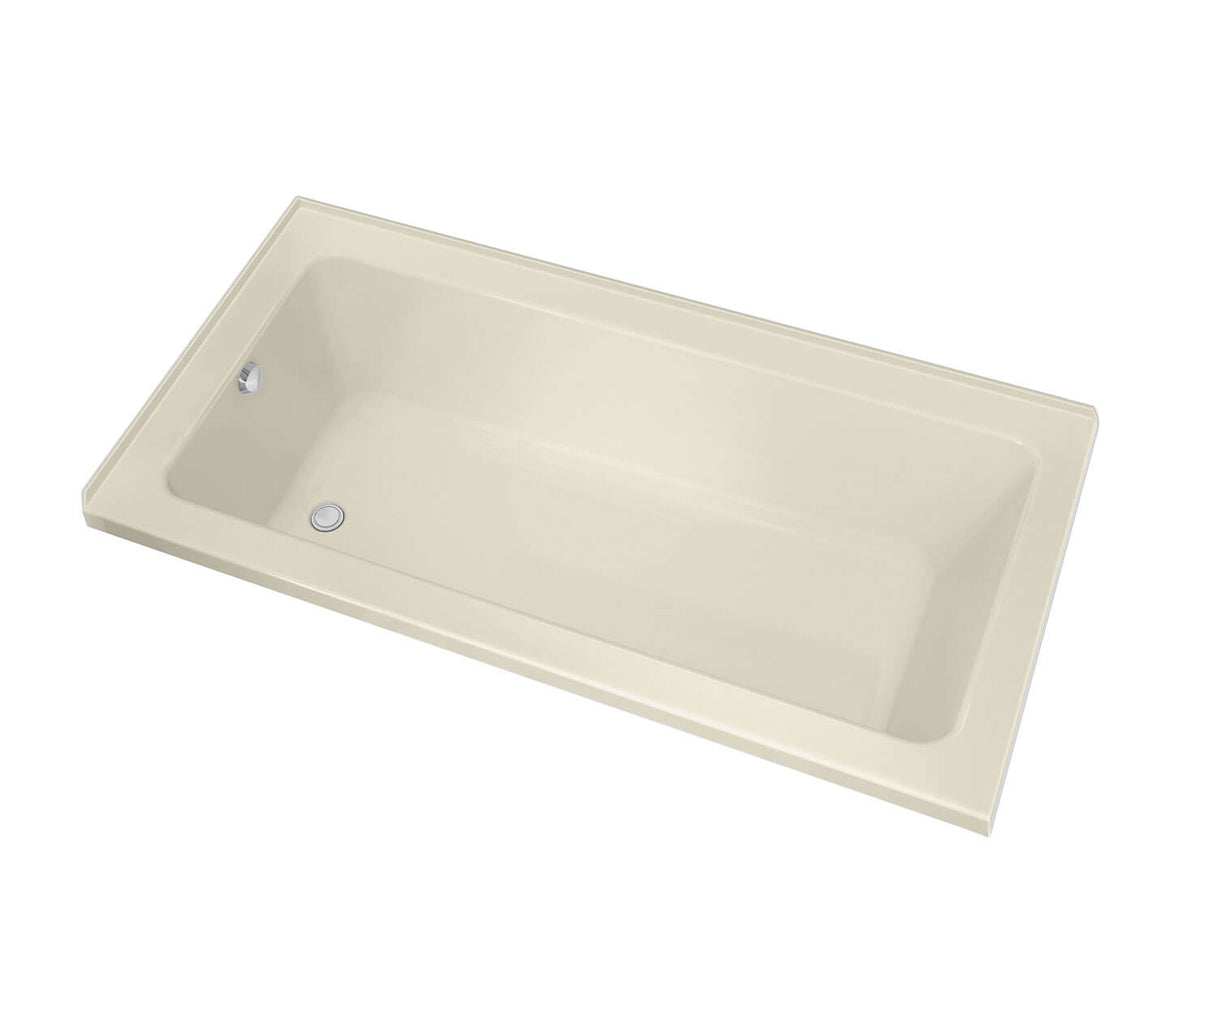 MAAX 106211-L-003-004 Pose 7236 IF Acrylic Corner Left Left-Hand Drain Whirlpool Bathtub in Bone